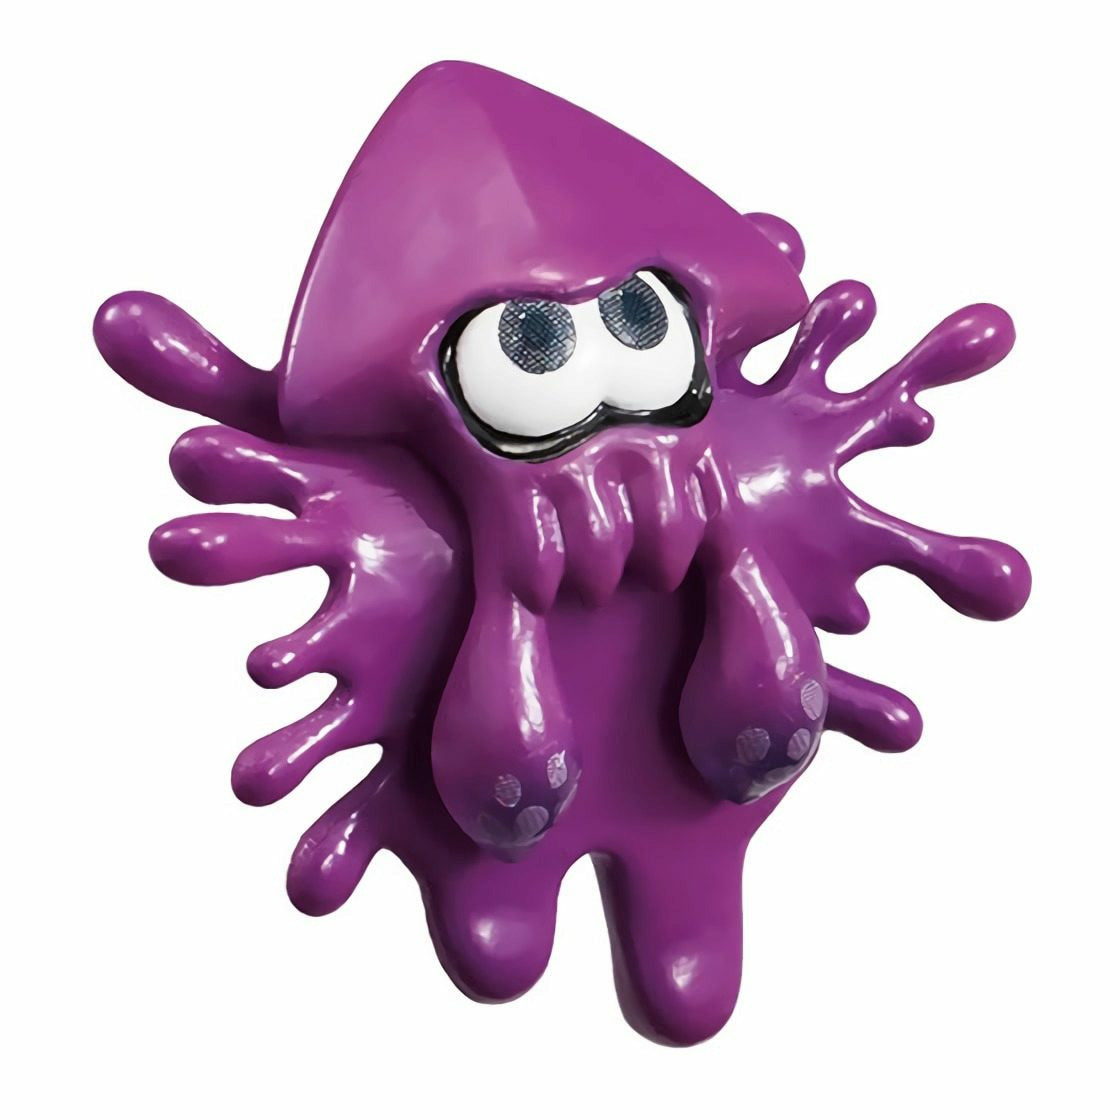 Splatoon Ika No Sugata Mascot Inkling Purple Ver. Dust Plug